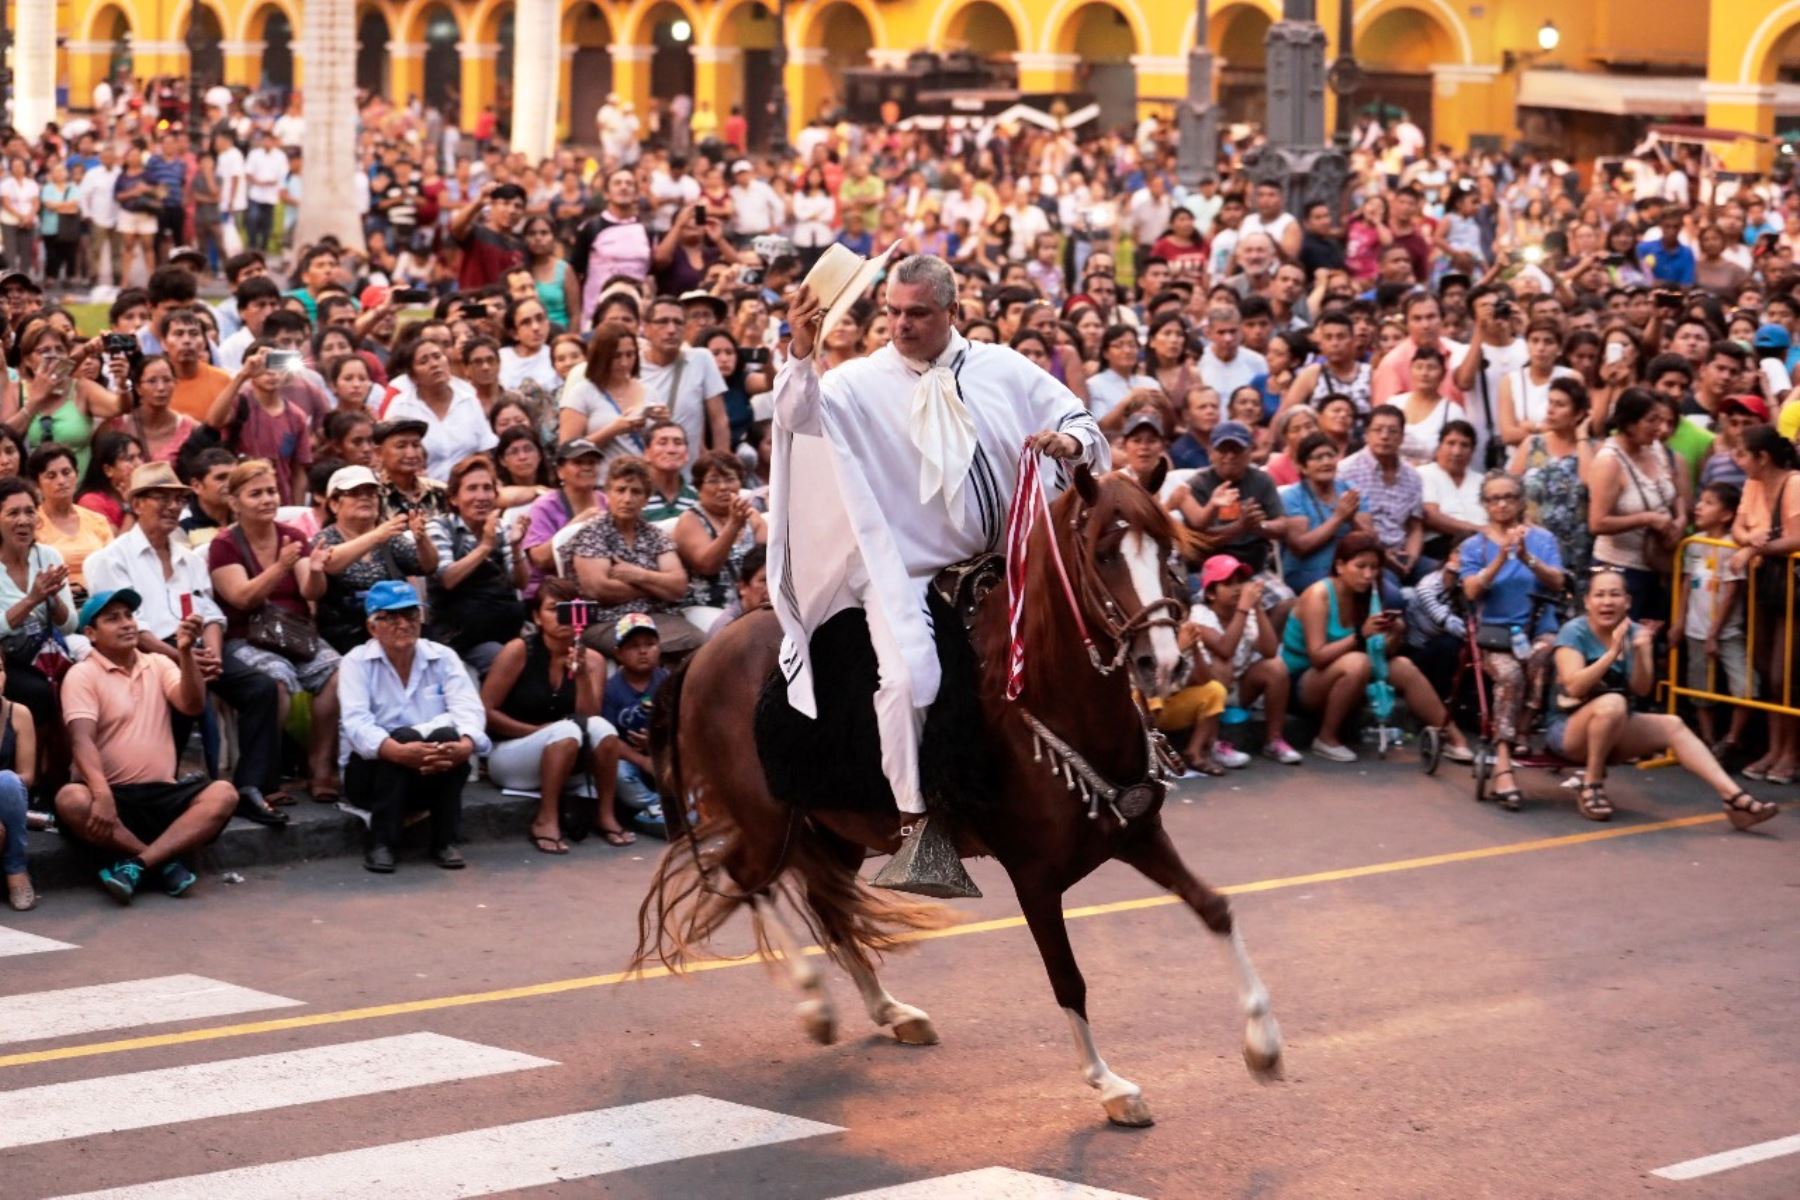 Mañana se celebrará Fiestas Patrias en programa Al Damero de Pizarrro sin Carro. Foto: ANDINA/Difusión.